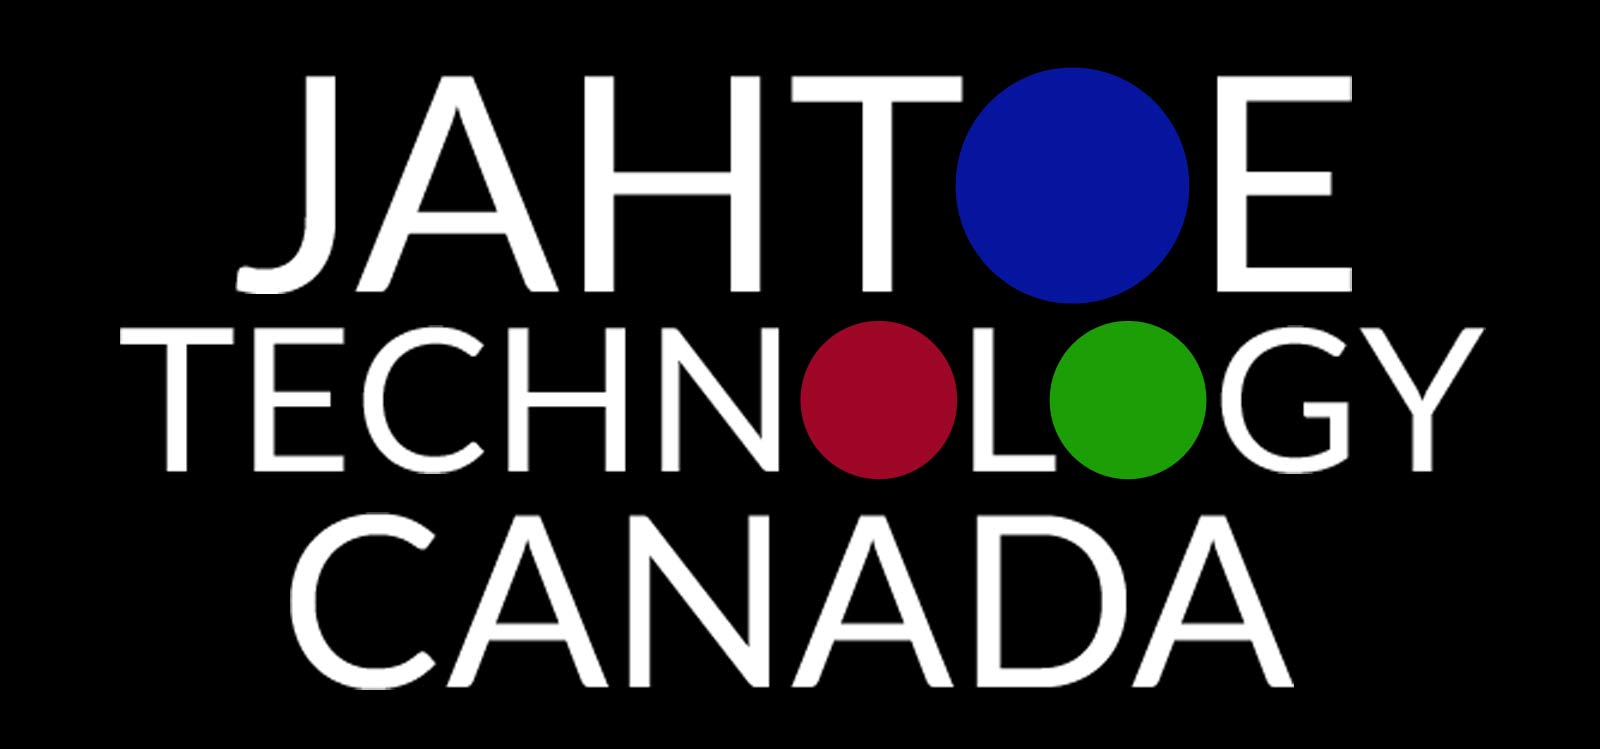 Jahtoe Technology Canada